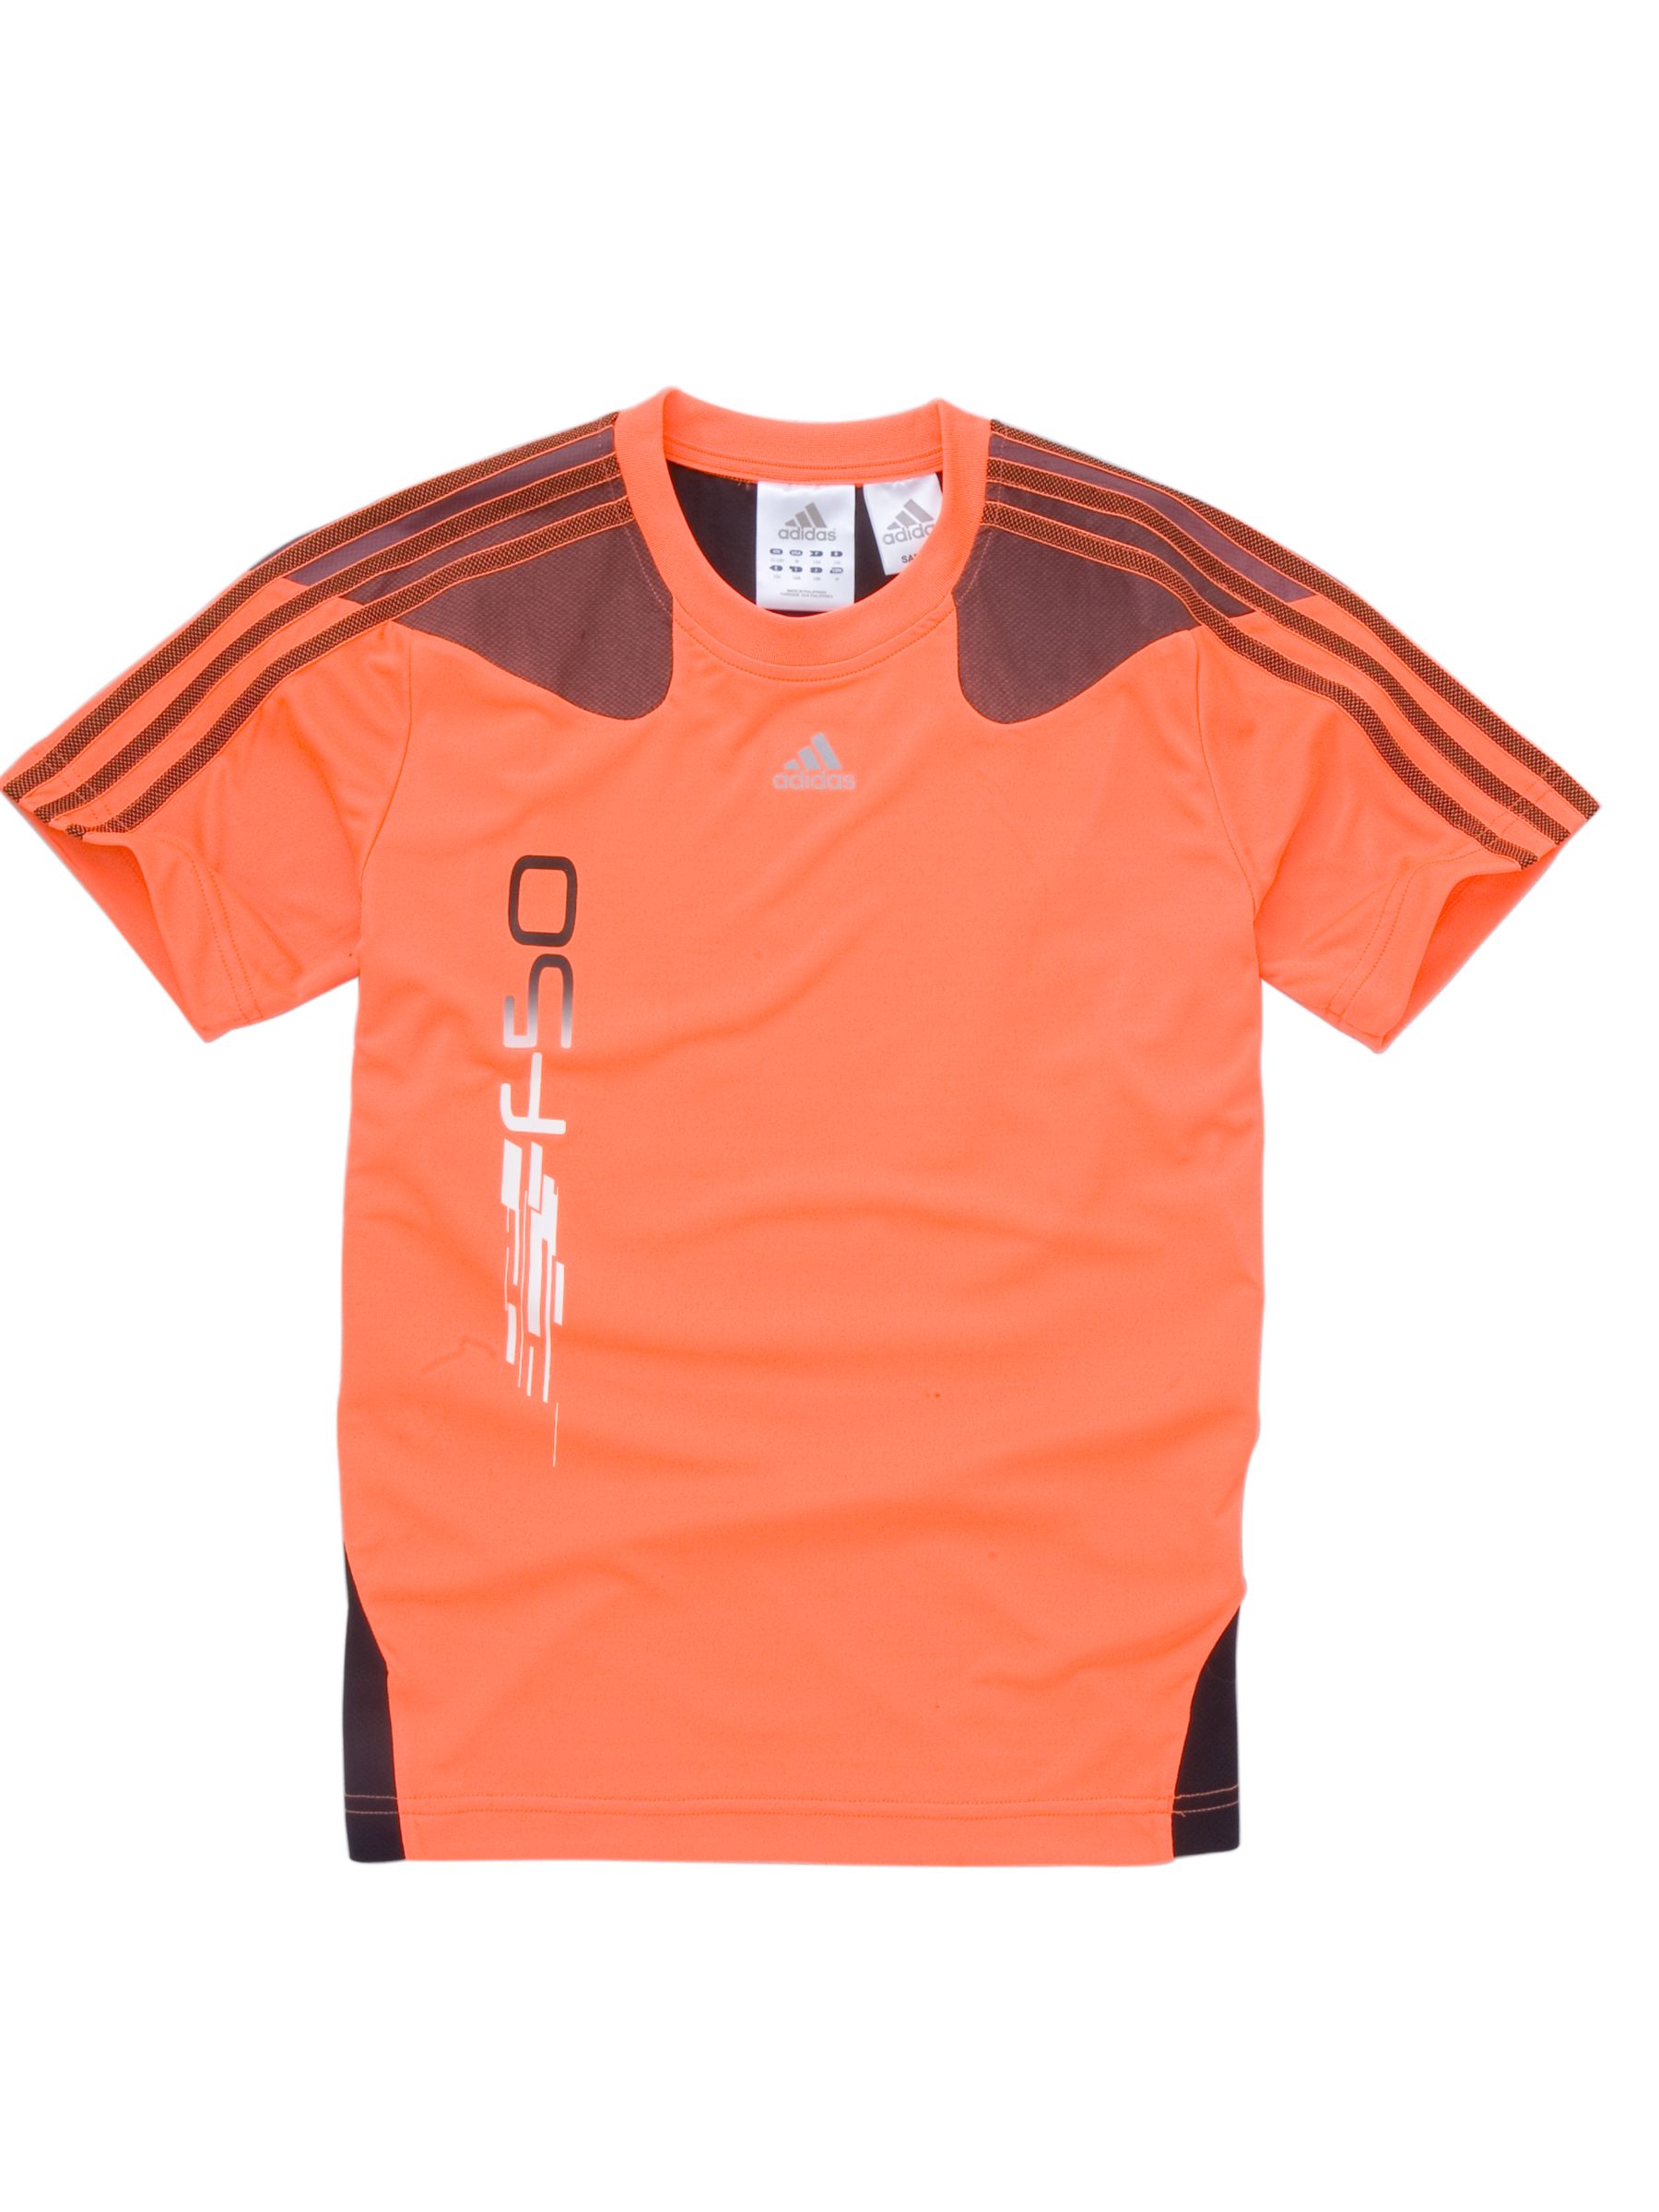 Adidas Performance Short Sleeve T-Shirt, Orange